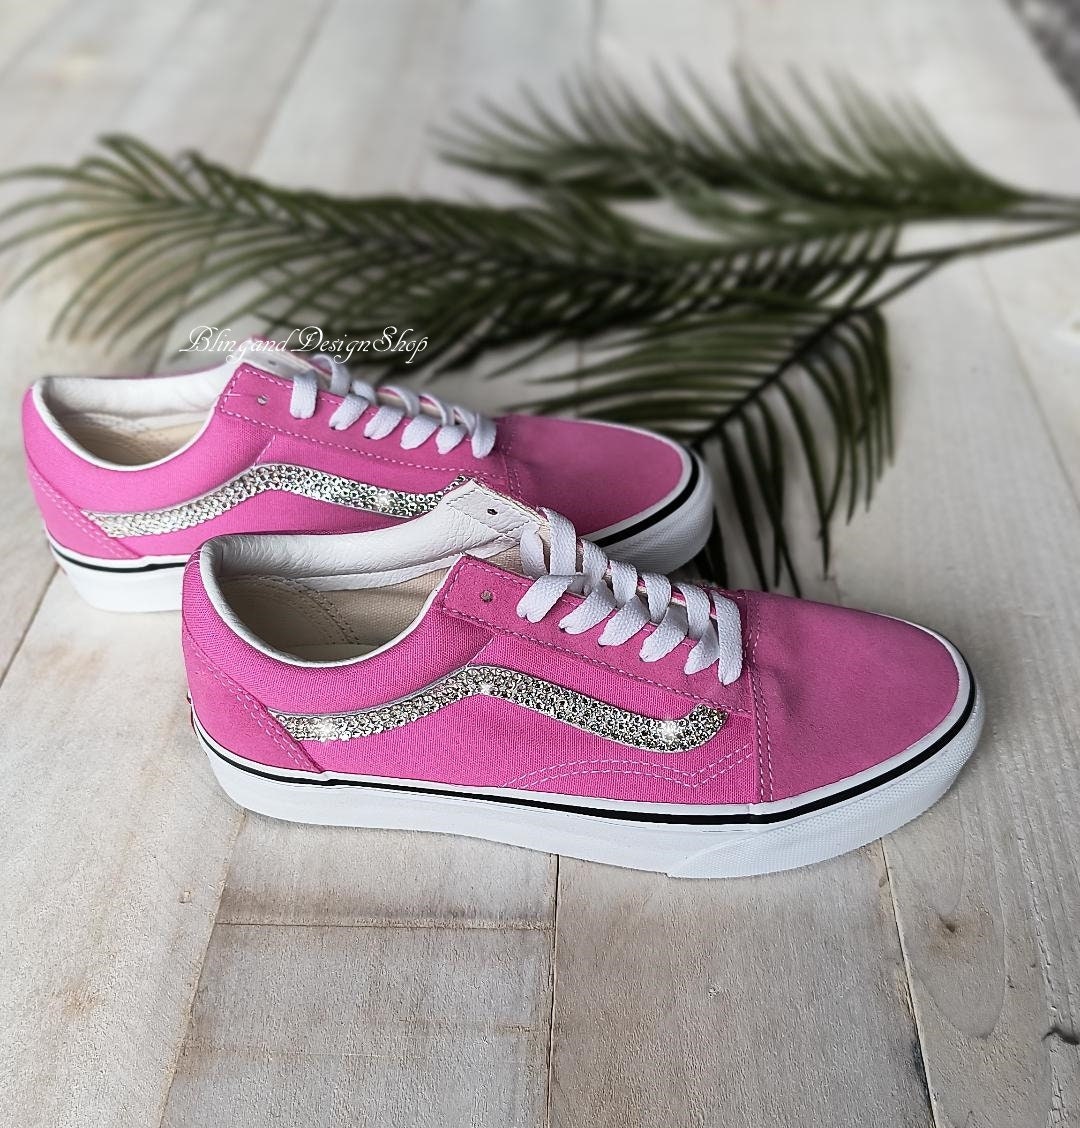 Lyn legation legemliggøre Swarovski Women's Vans Old Skool Pink Sneakers Customized - Etsy